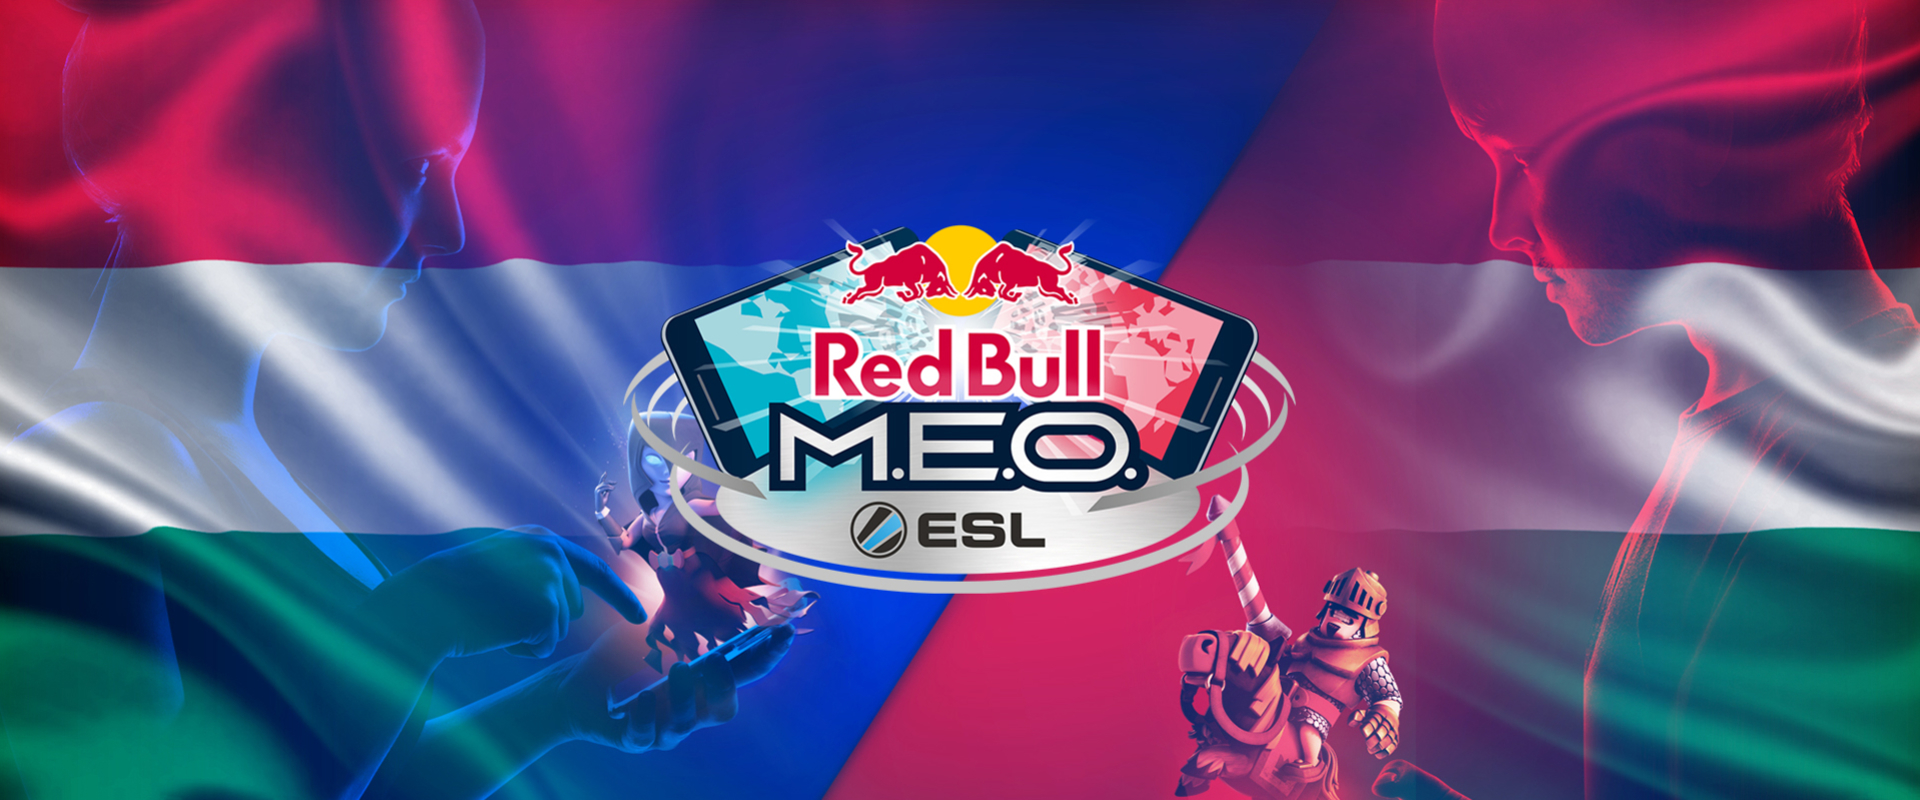 Red Bull MEO 1. kvalifikációs torna - Legszebb pillanatok